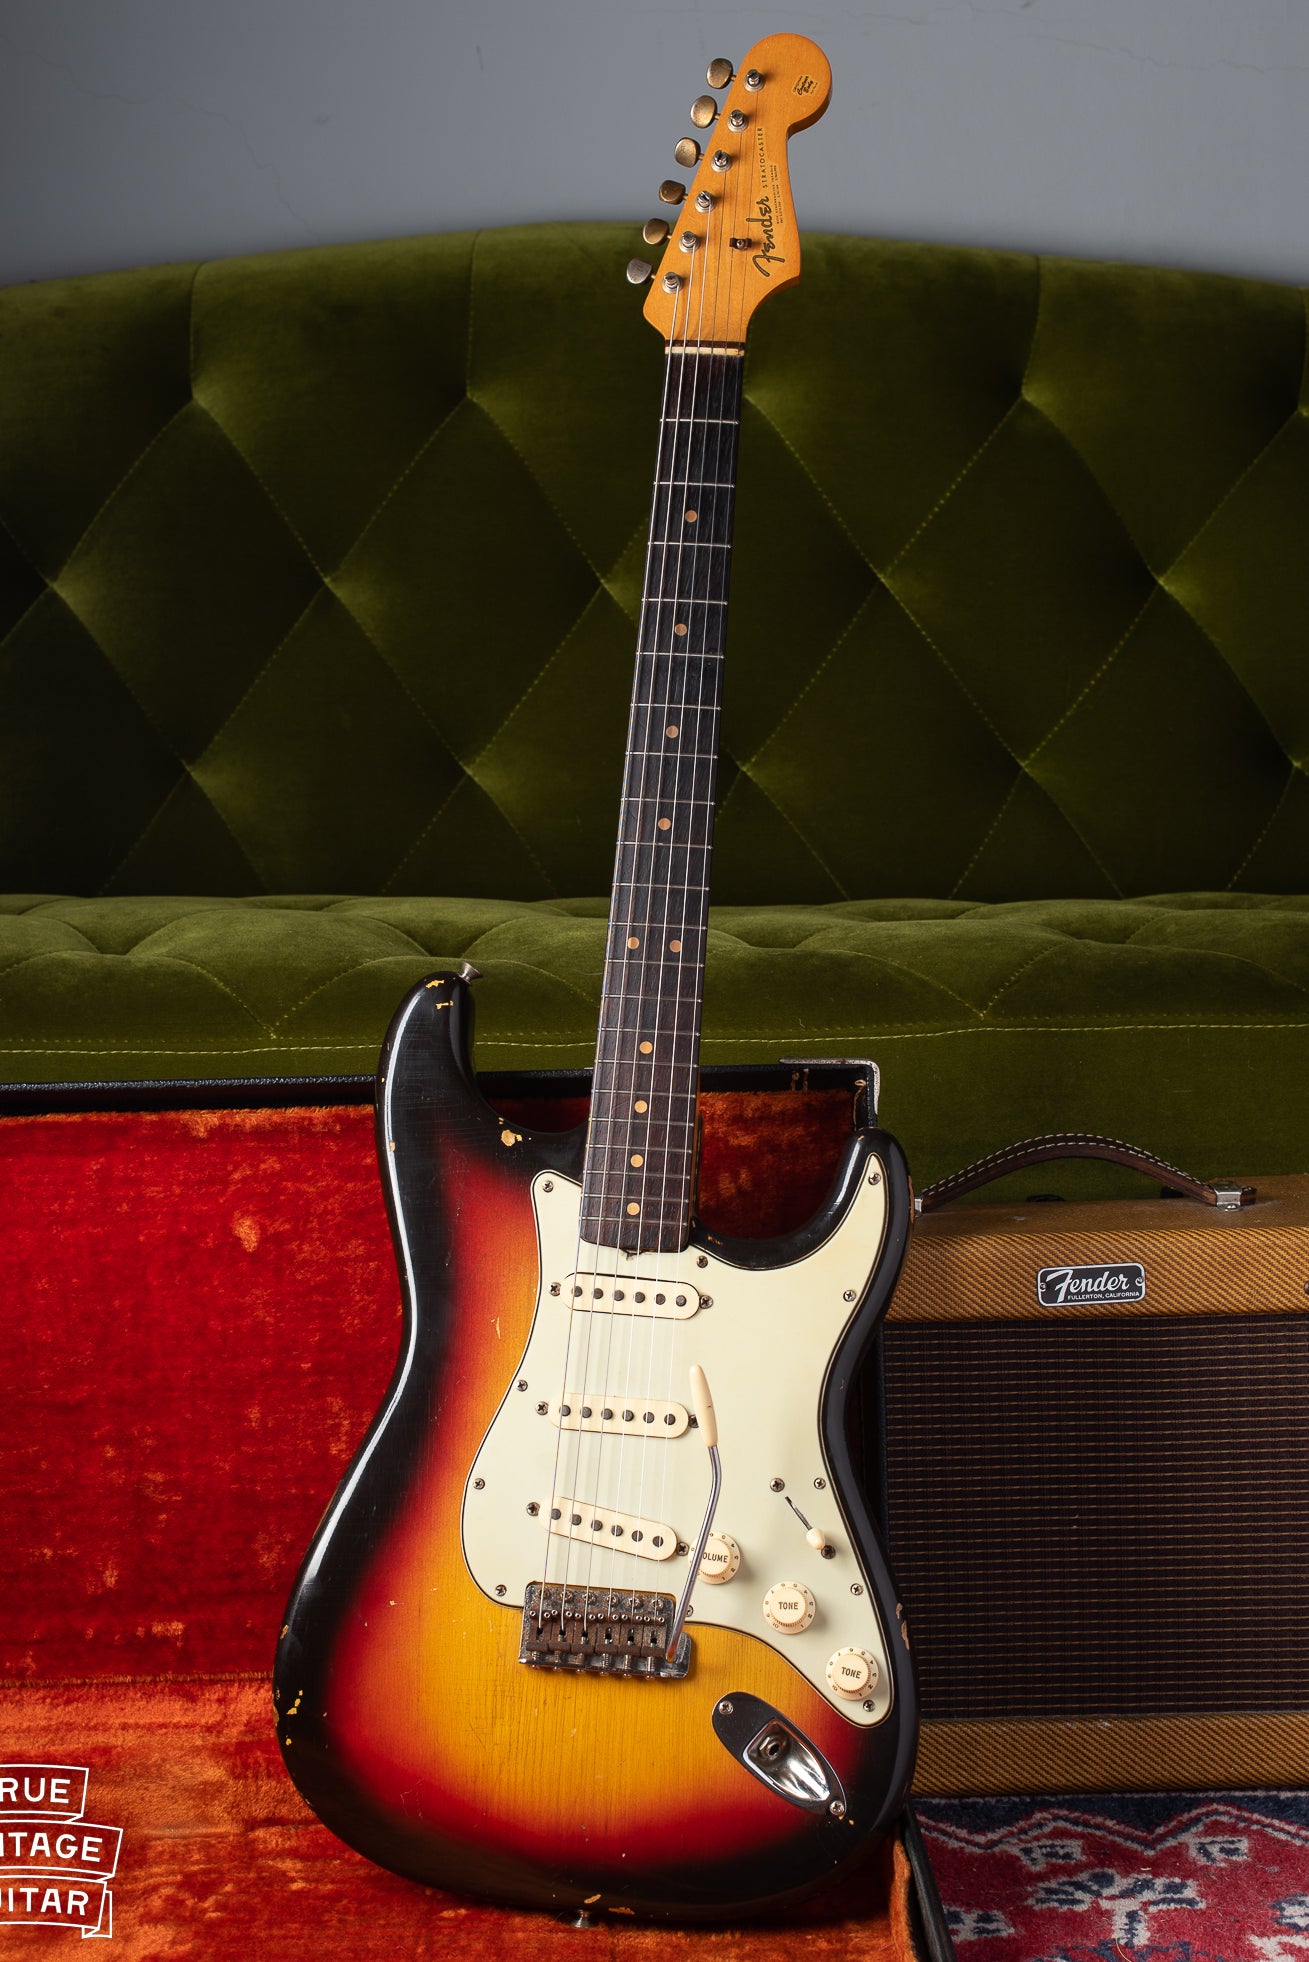 1963 Fender Stratocaster with Sunburst finish, mint green pickguard